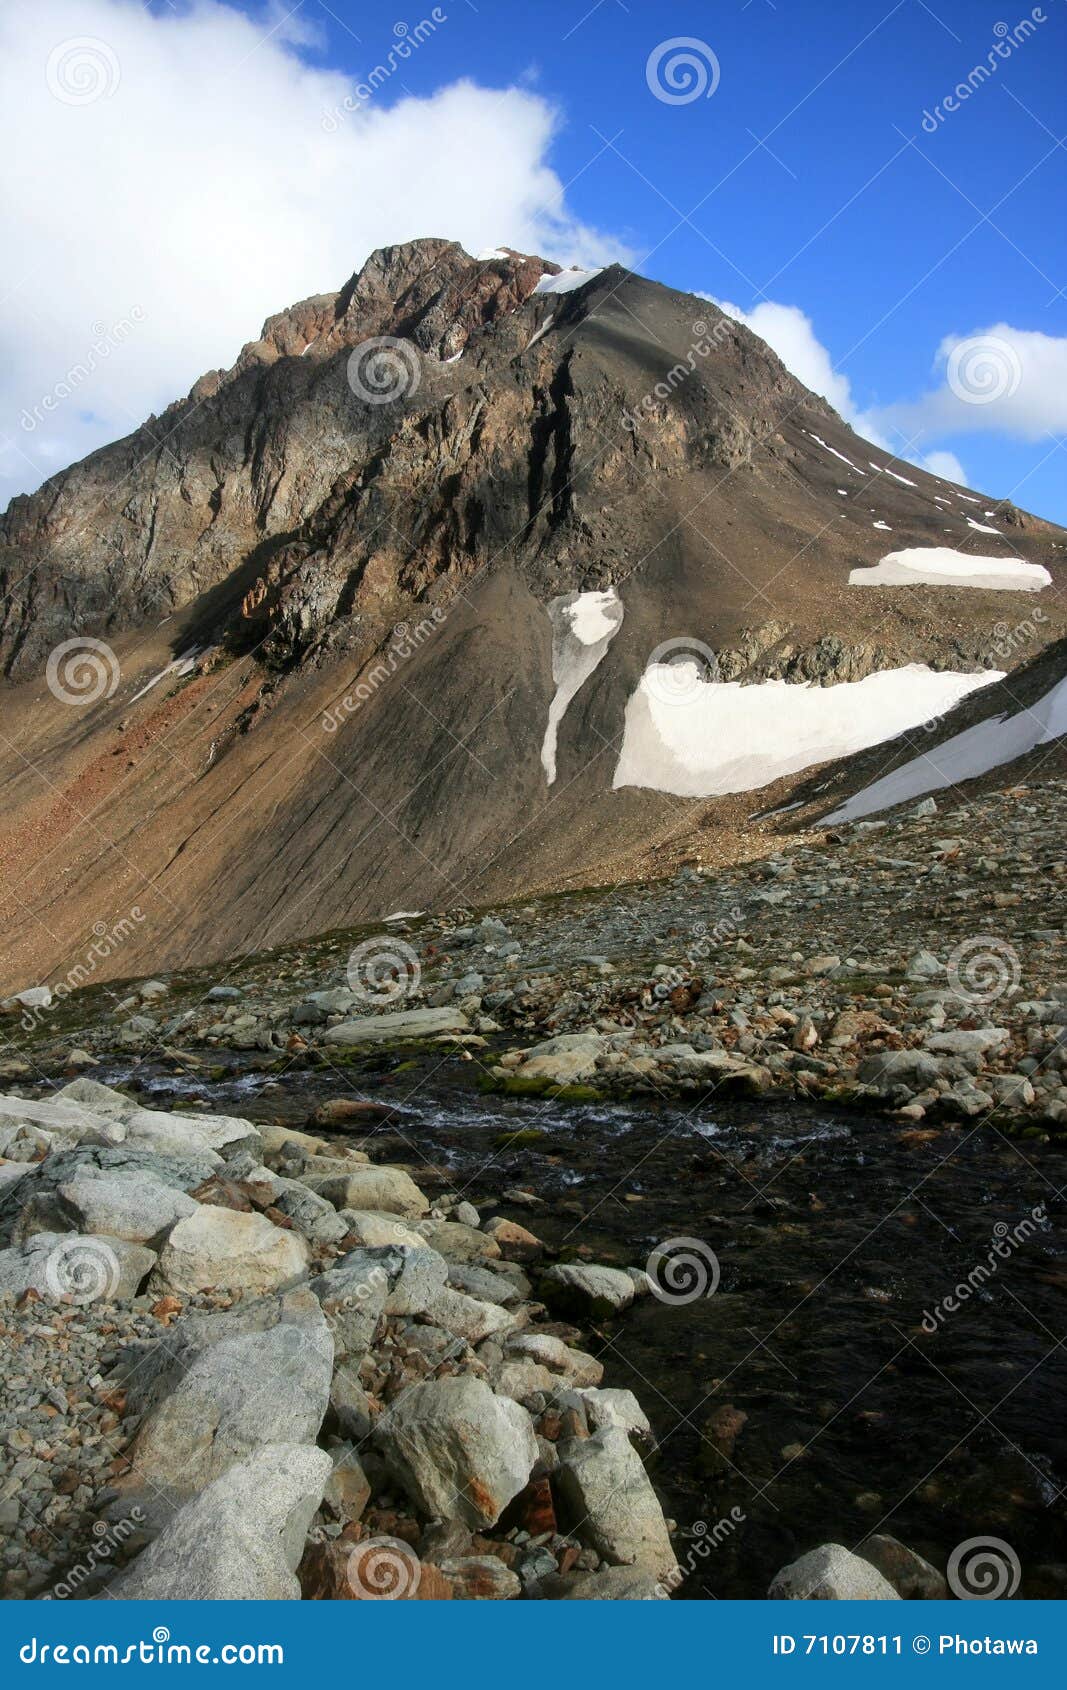 fissile peak and russet creek